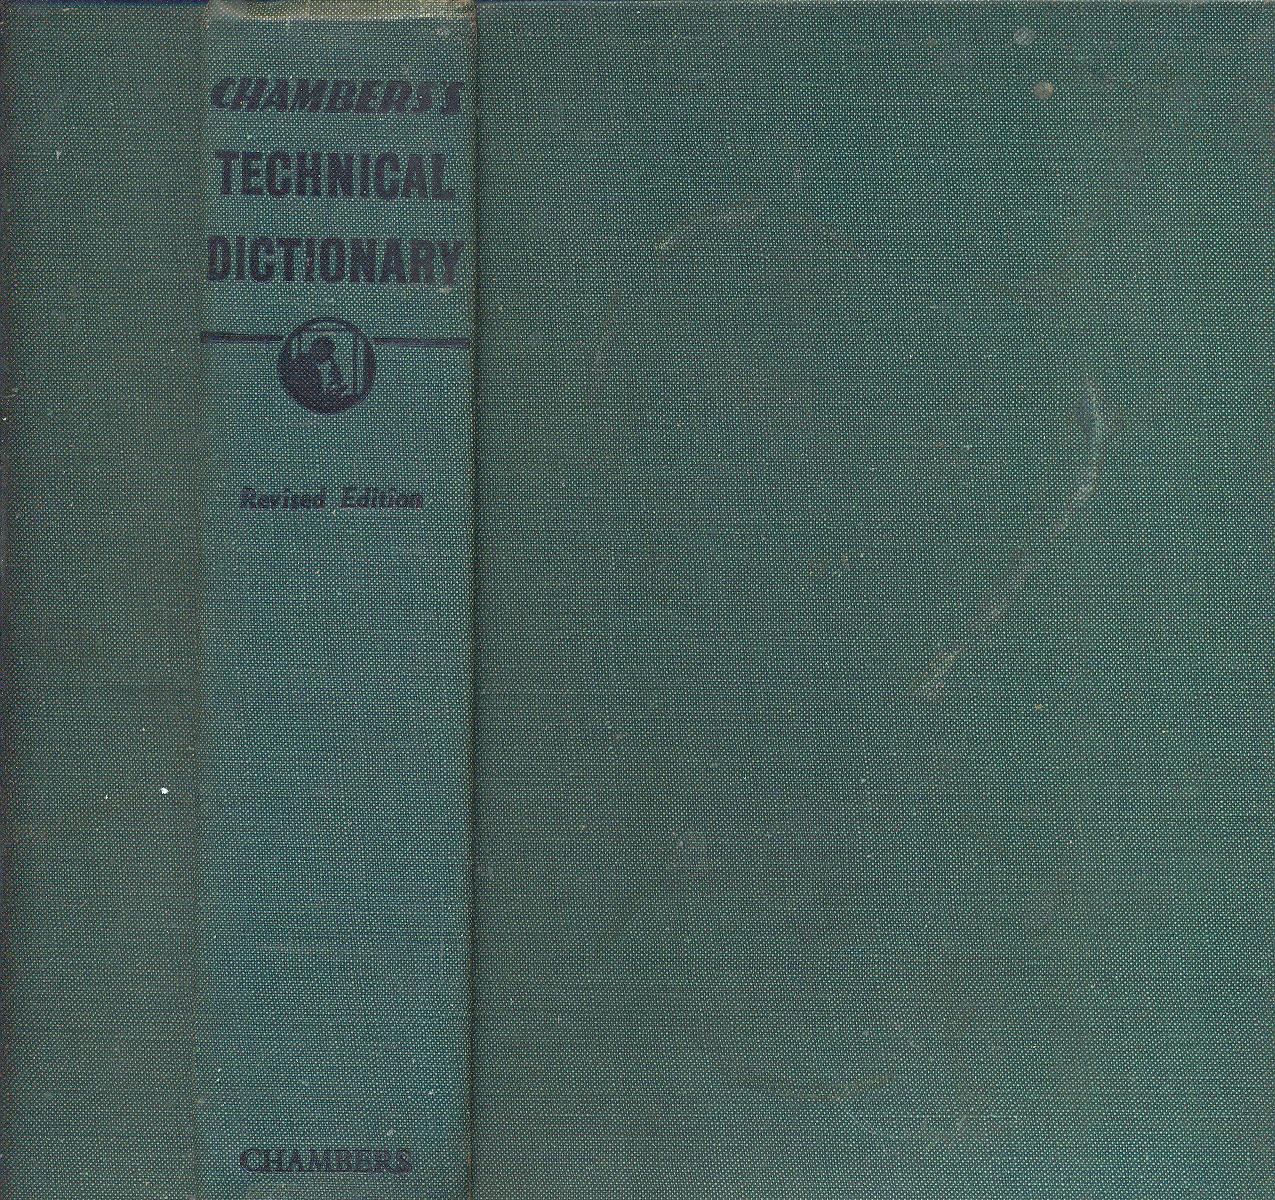 easy chambers dictionary